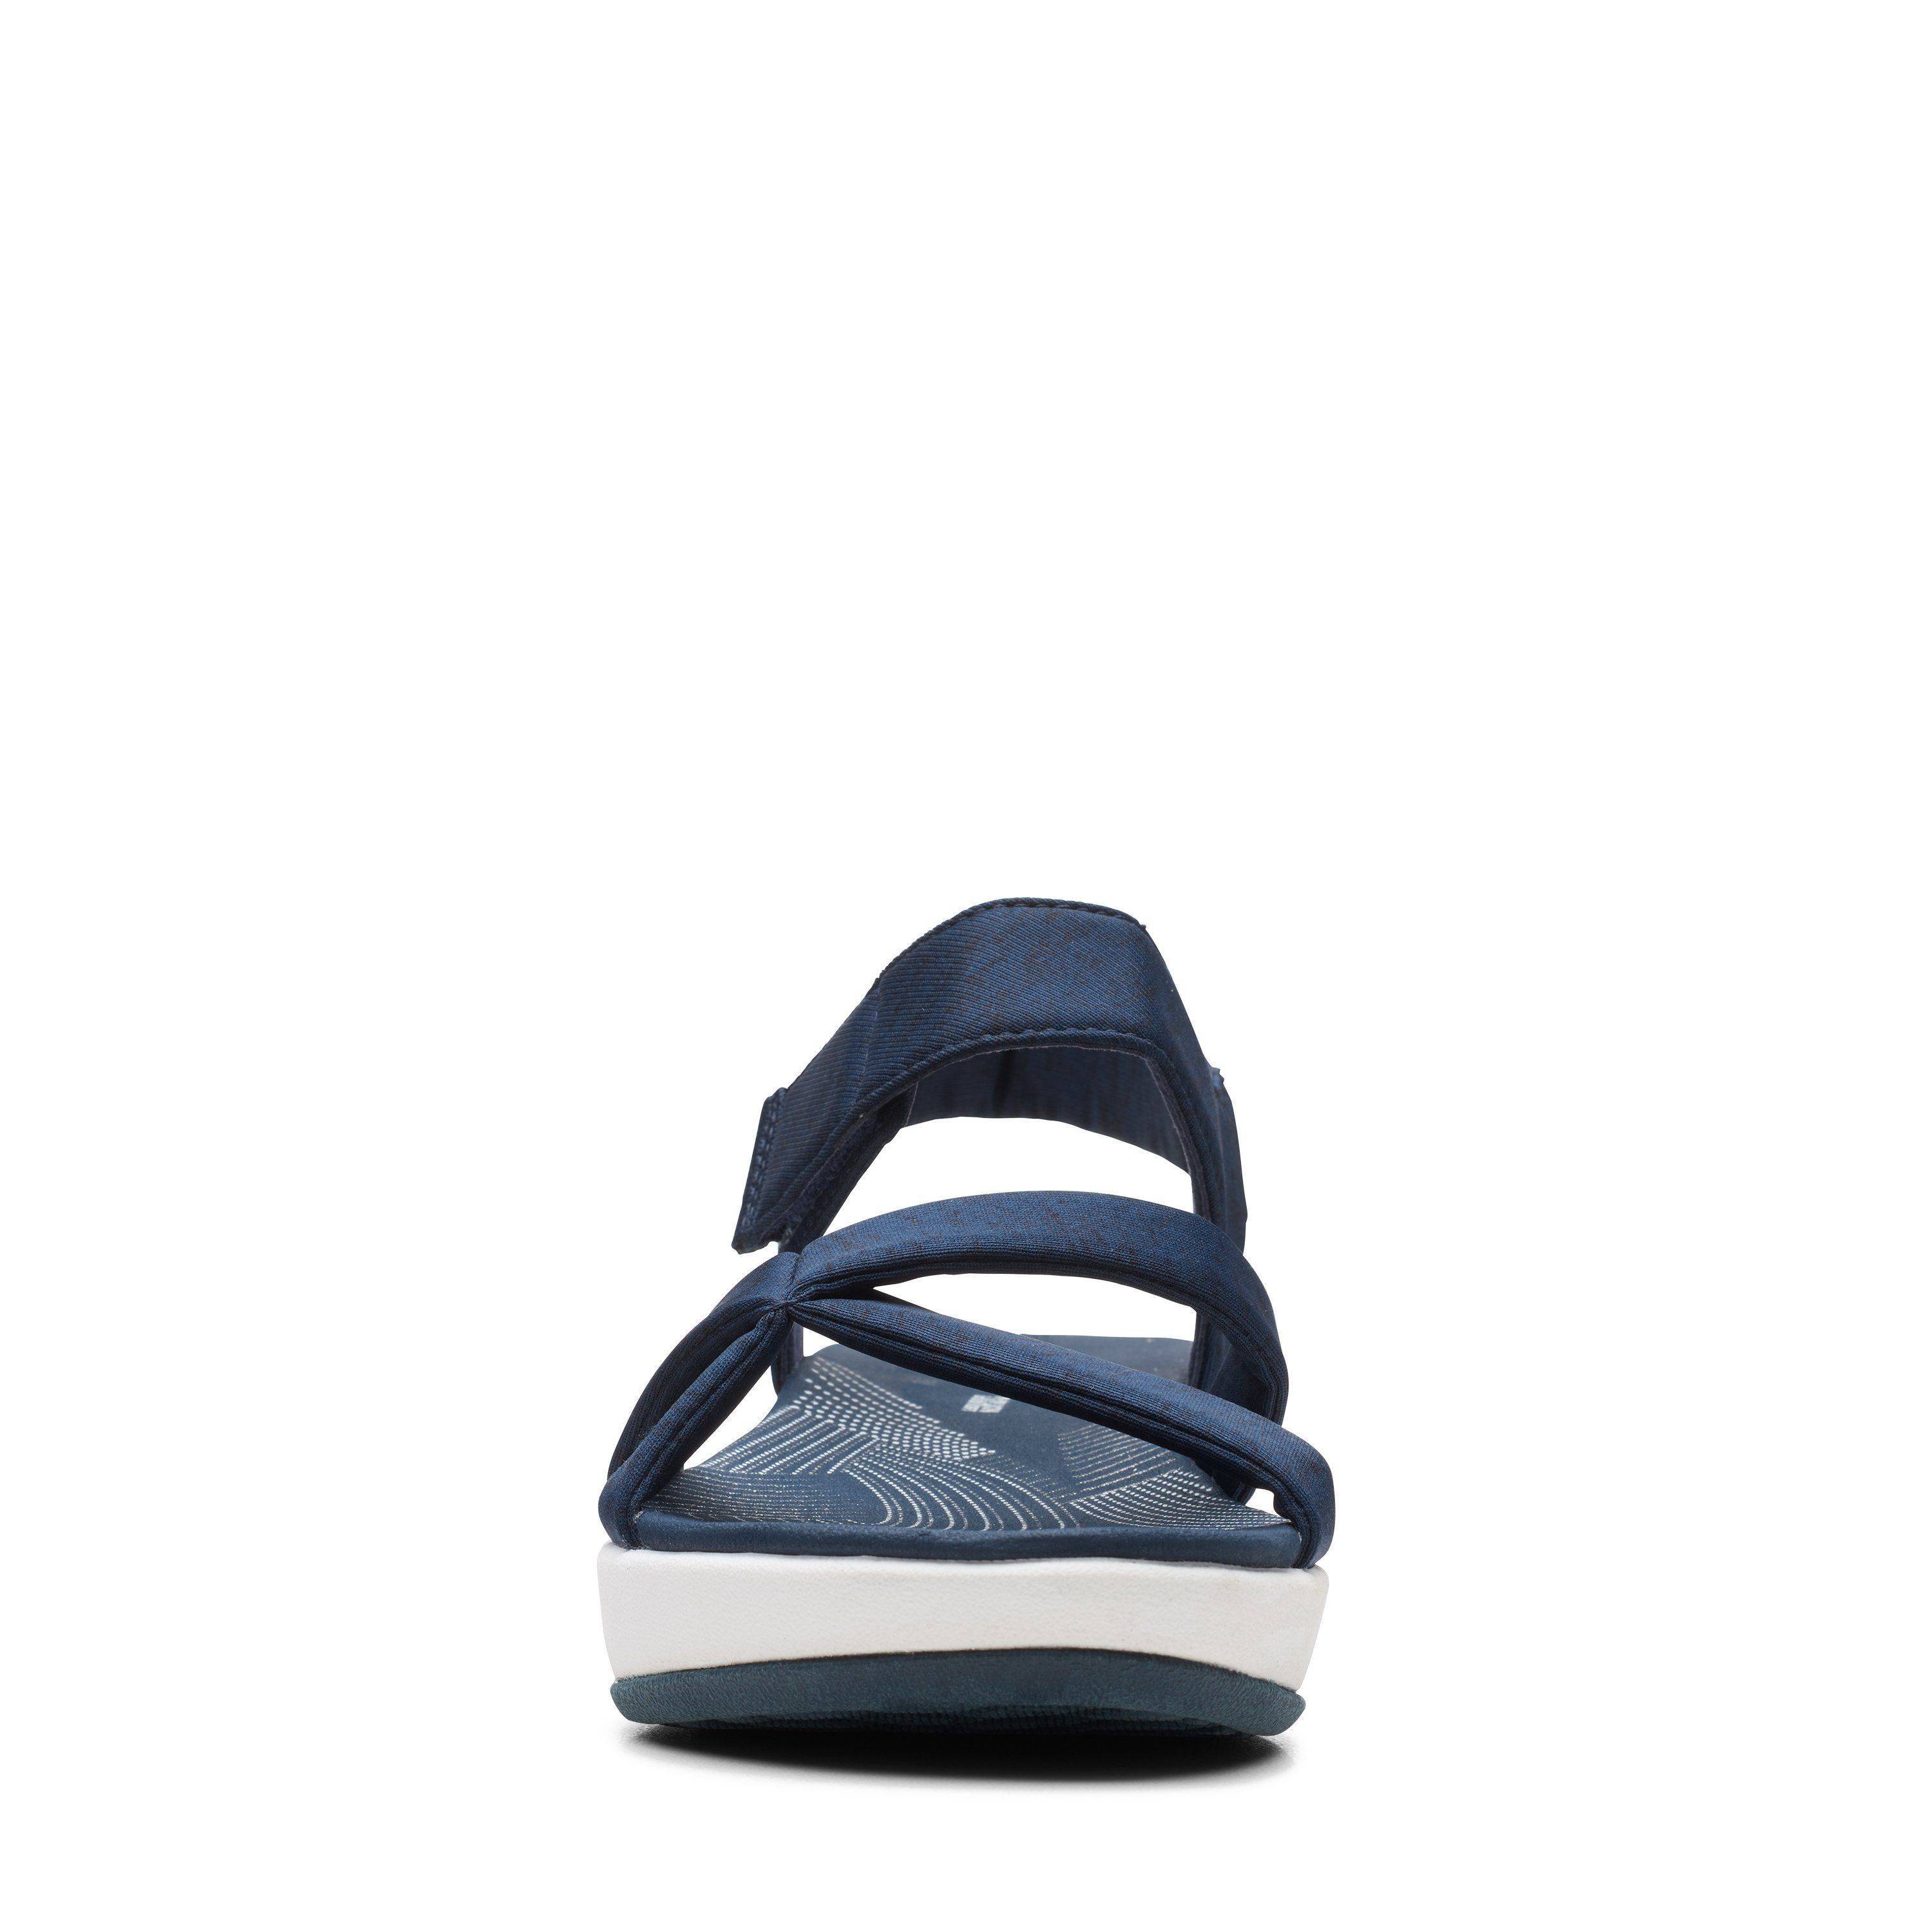 Женские сандалии Clarks, синие, цвет синий, размер 38 - фото 3